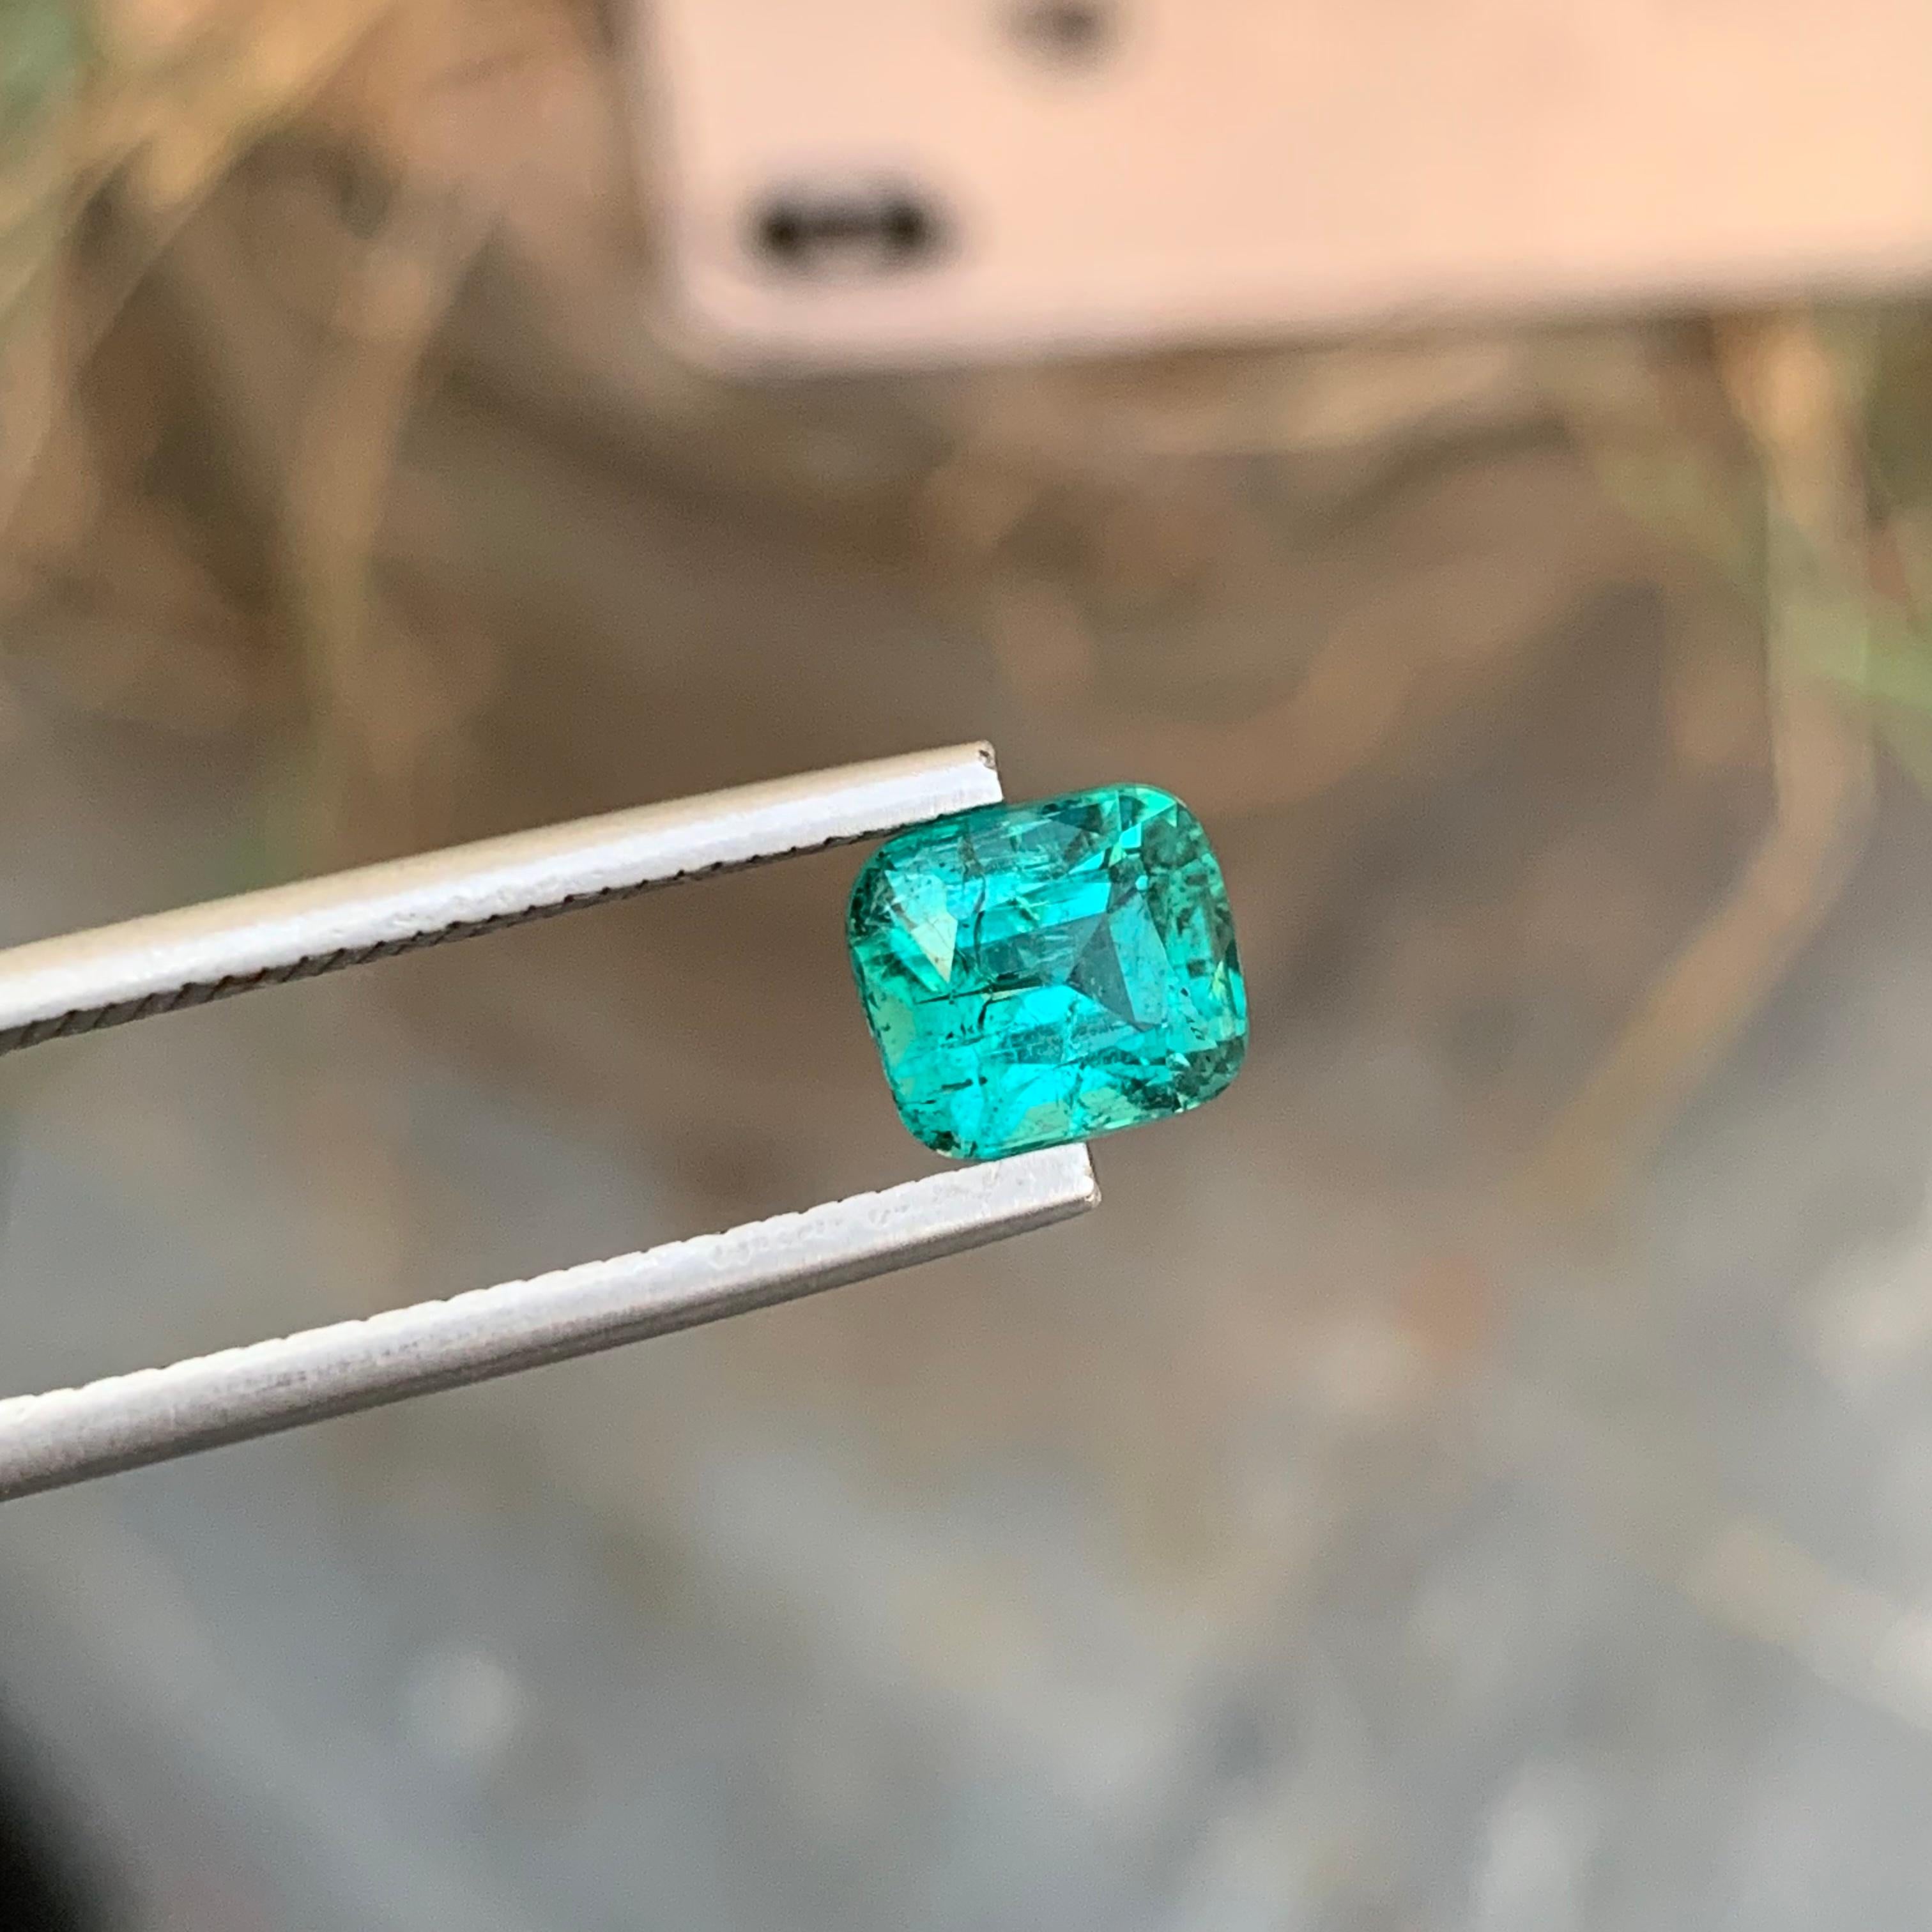 2.15 Carat Natural Loose Blueish Green Tourmaline Gemstone Afghan Mine 4